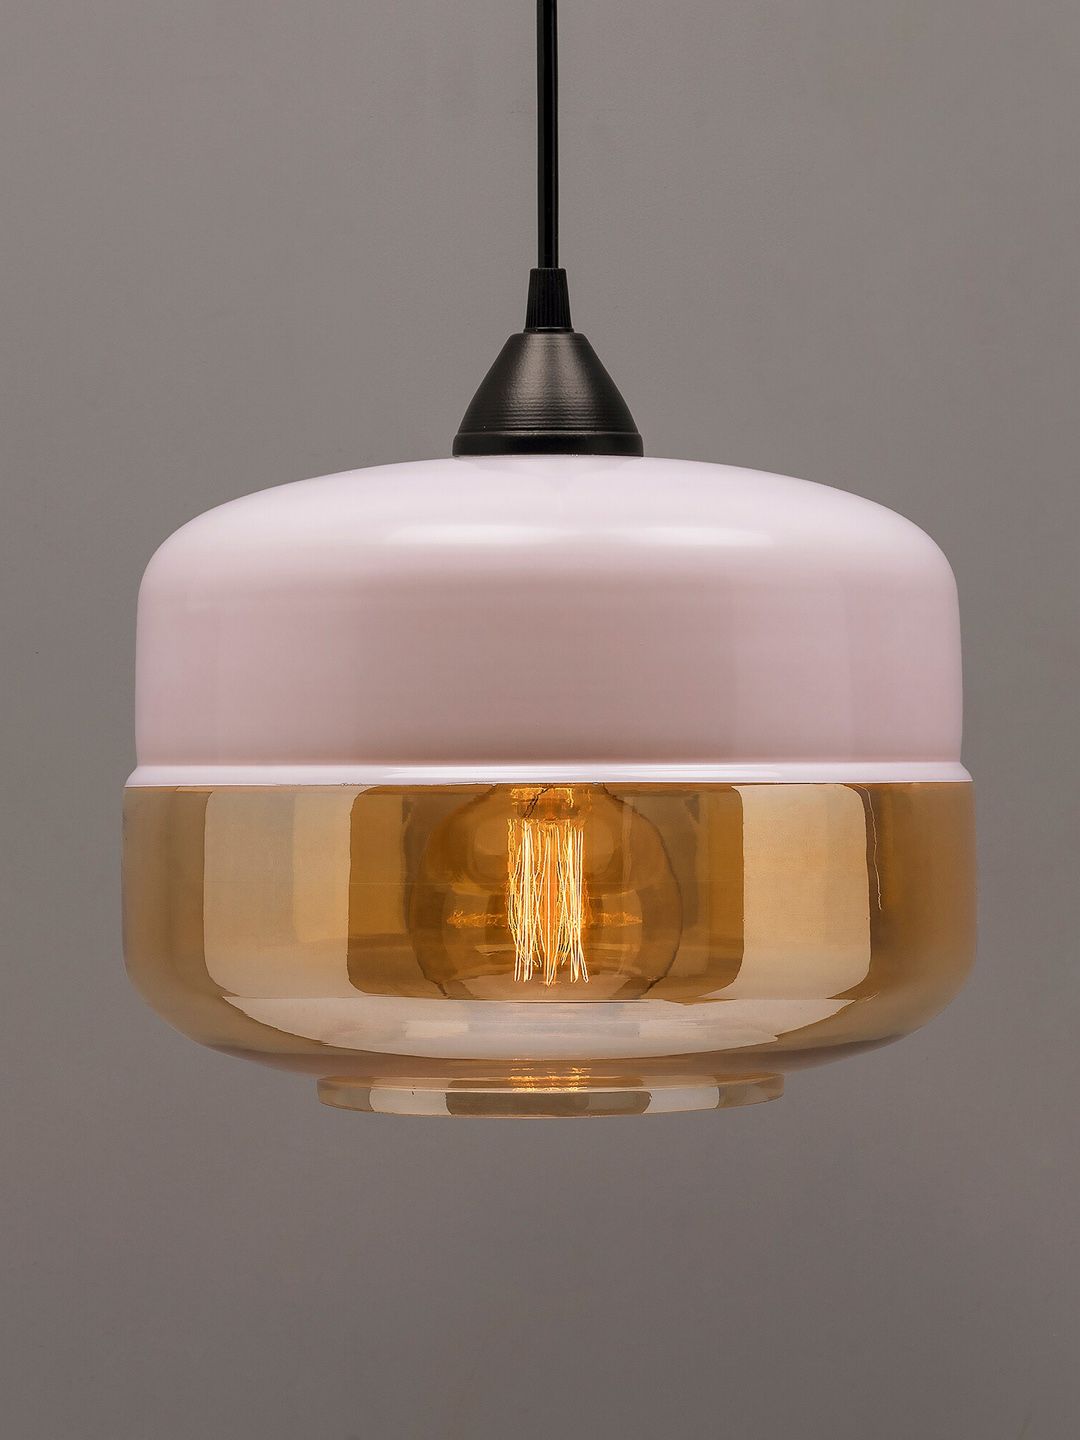 Homesake White & Gold-Toned Glass Pendant Light Ceiling Hanging Lamp Price in India